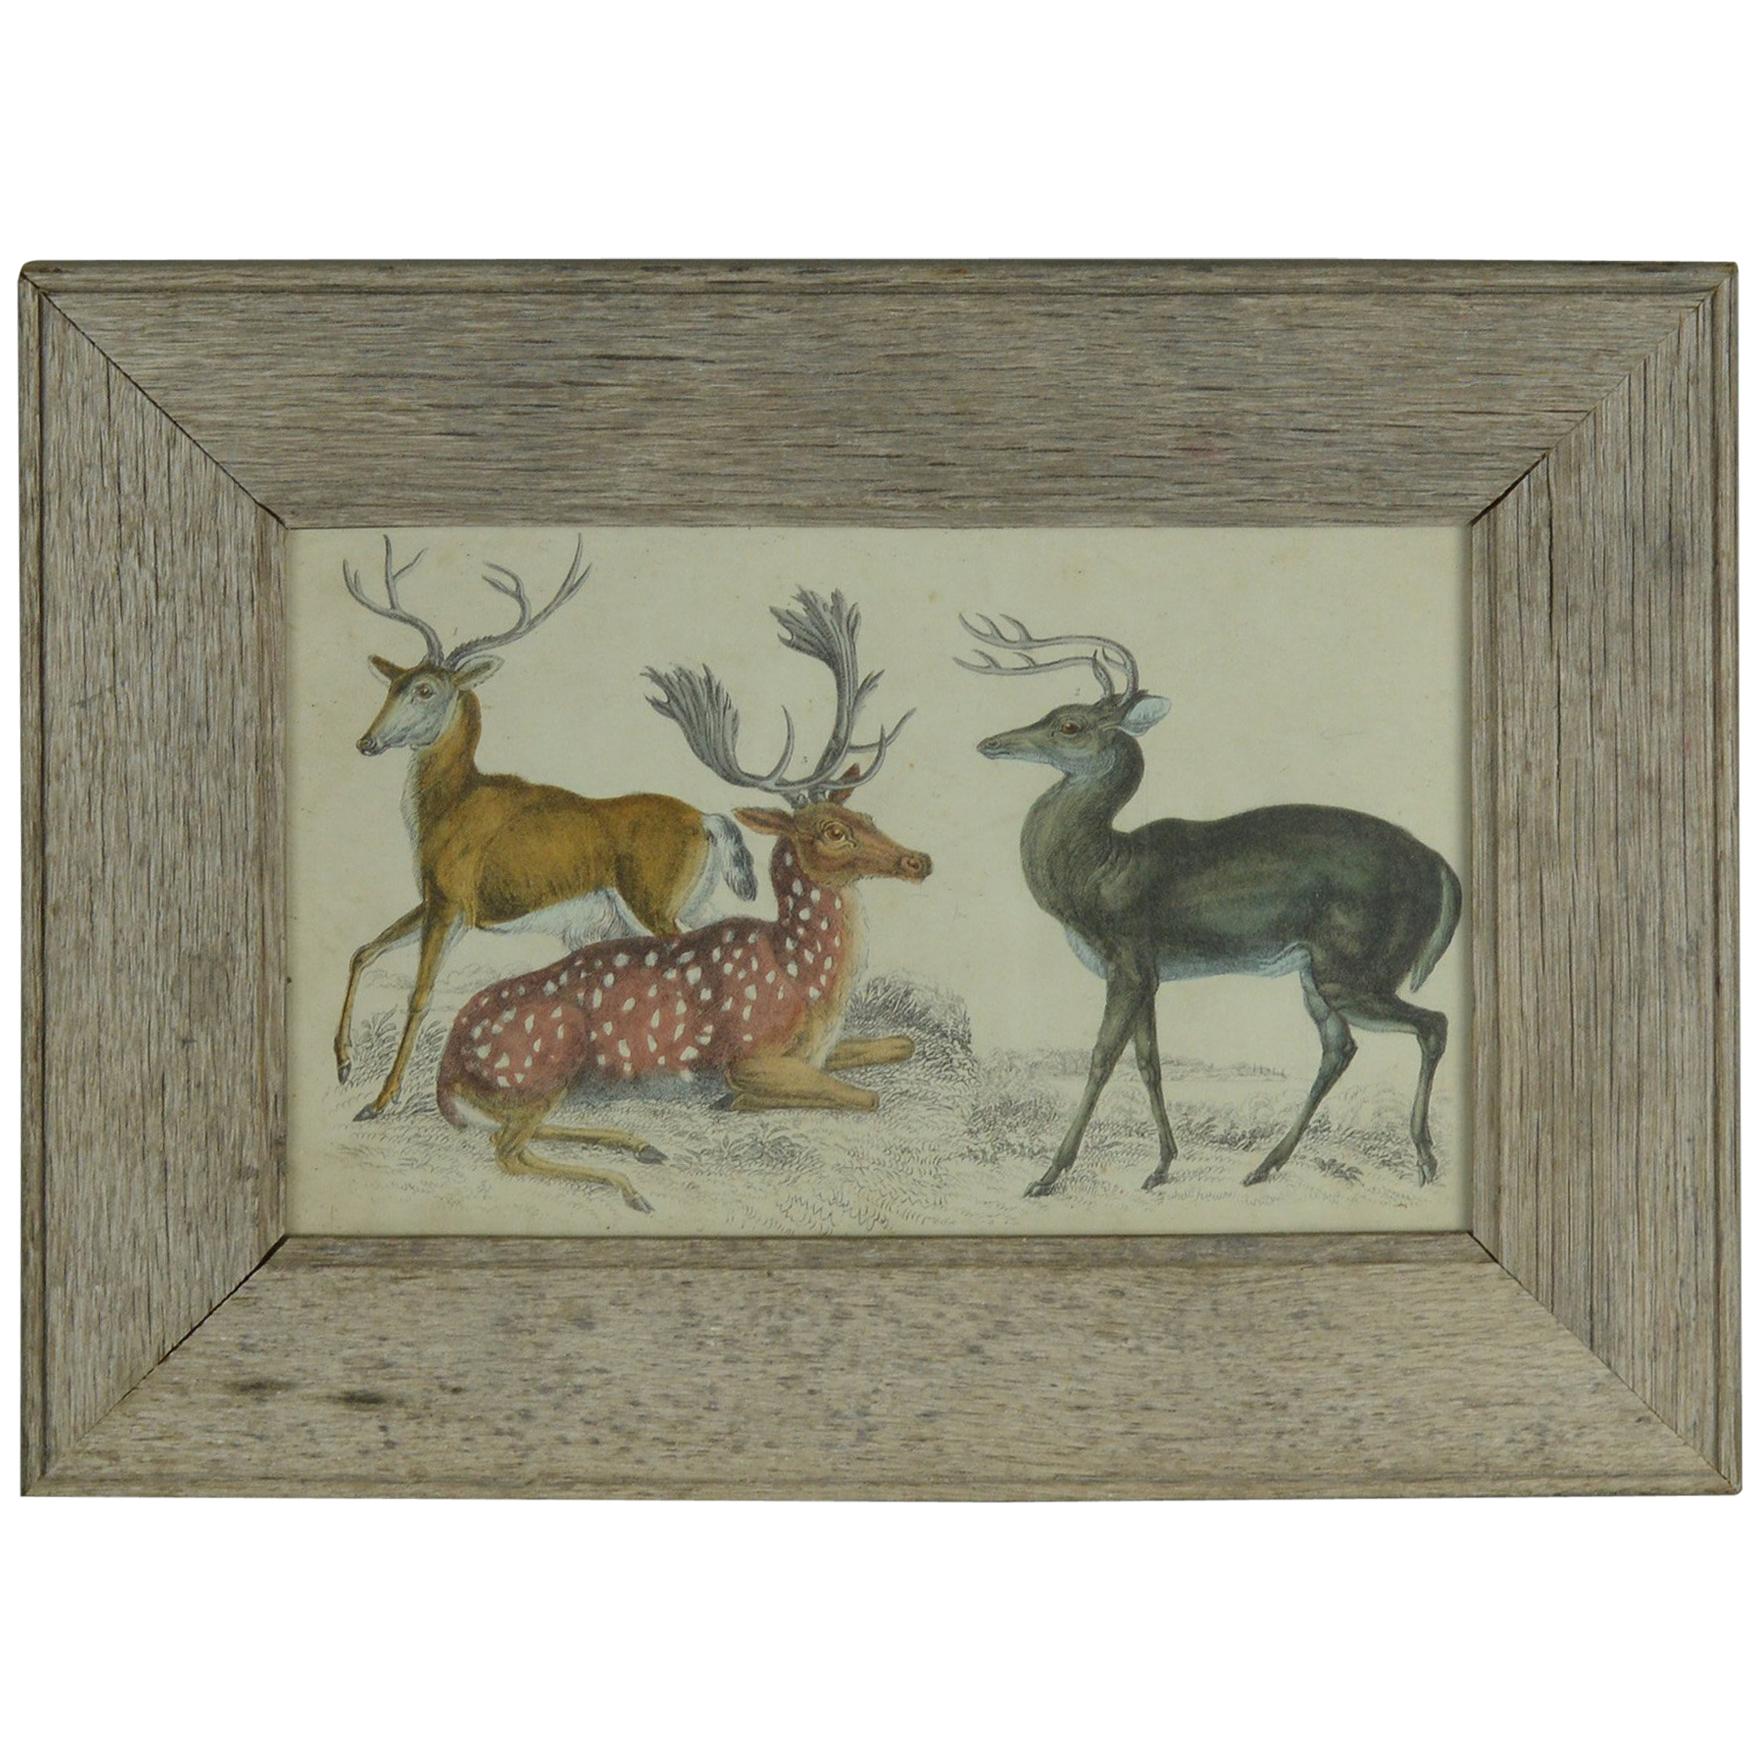 Original Antique Print of a Group of Deer, 1847